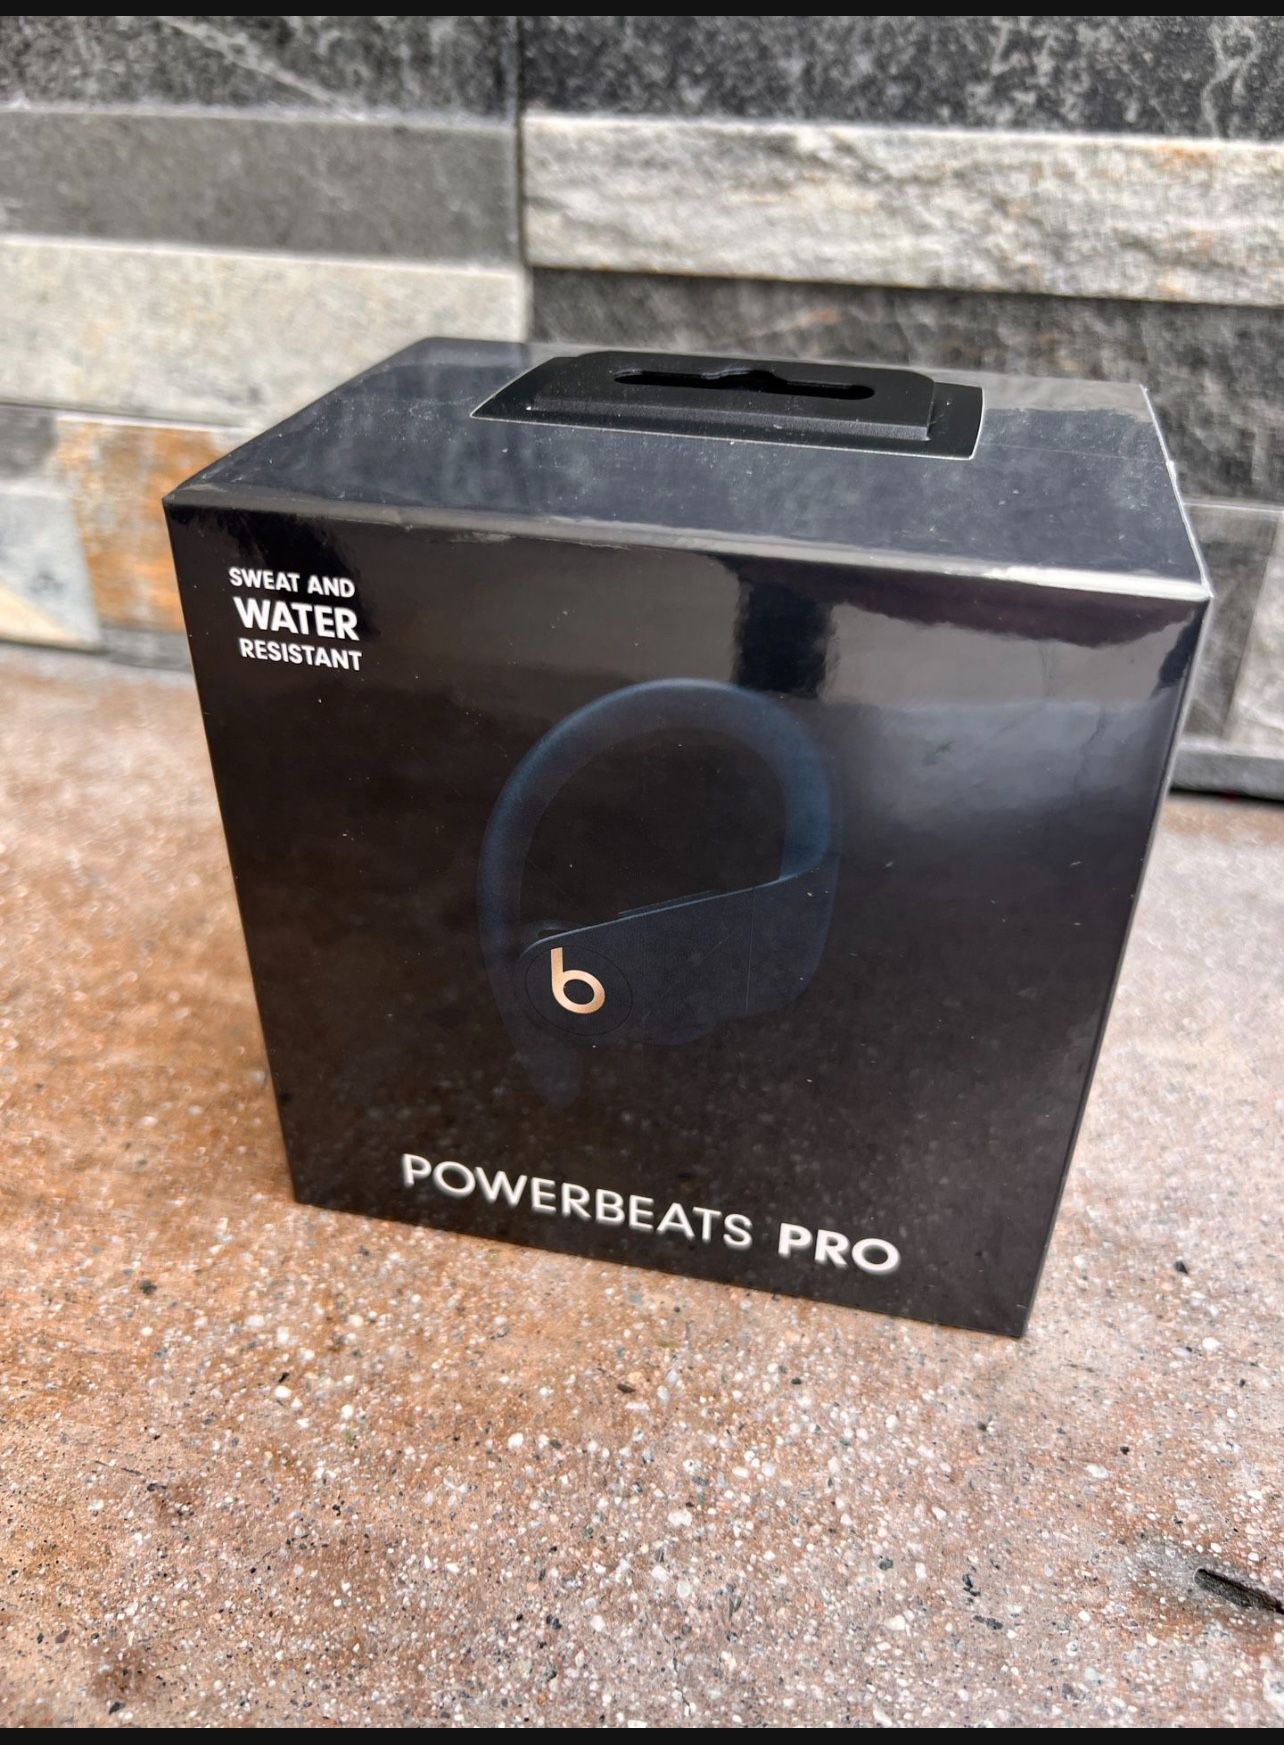 Beats Powerbeats Pro Wireless Earbuds - Apple H1 Headphone Chip, Class 1 Bluetooth Headphones, 9 Hours of Listening Time, Sweat Resistant,Built-in Mic